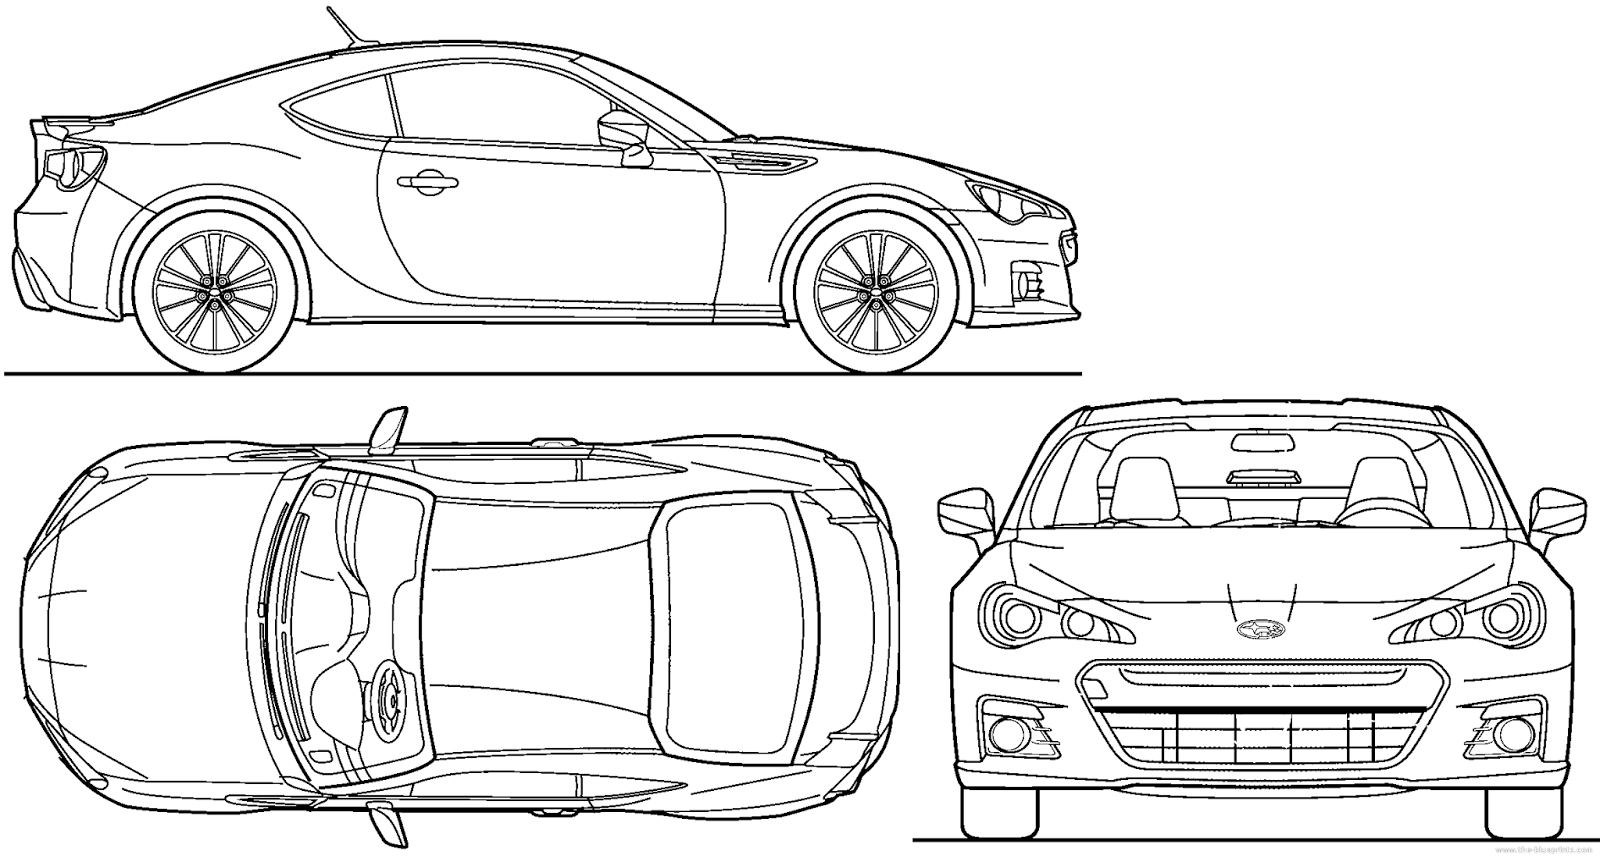 Download CGfrog: Most Loved Car Blueprints for 3D Modeling